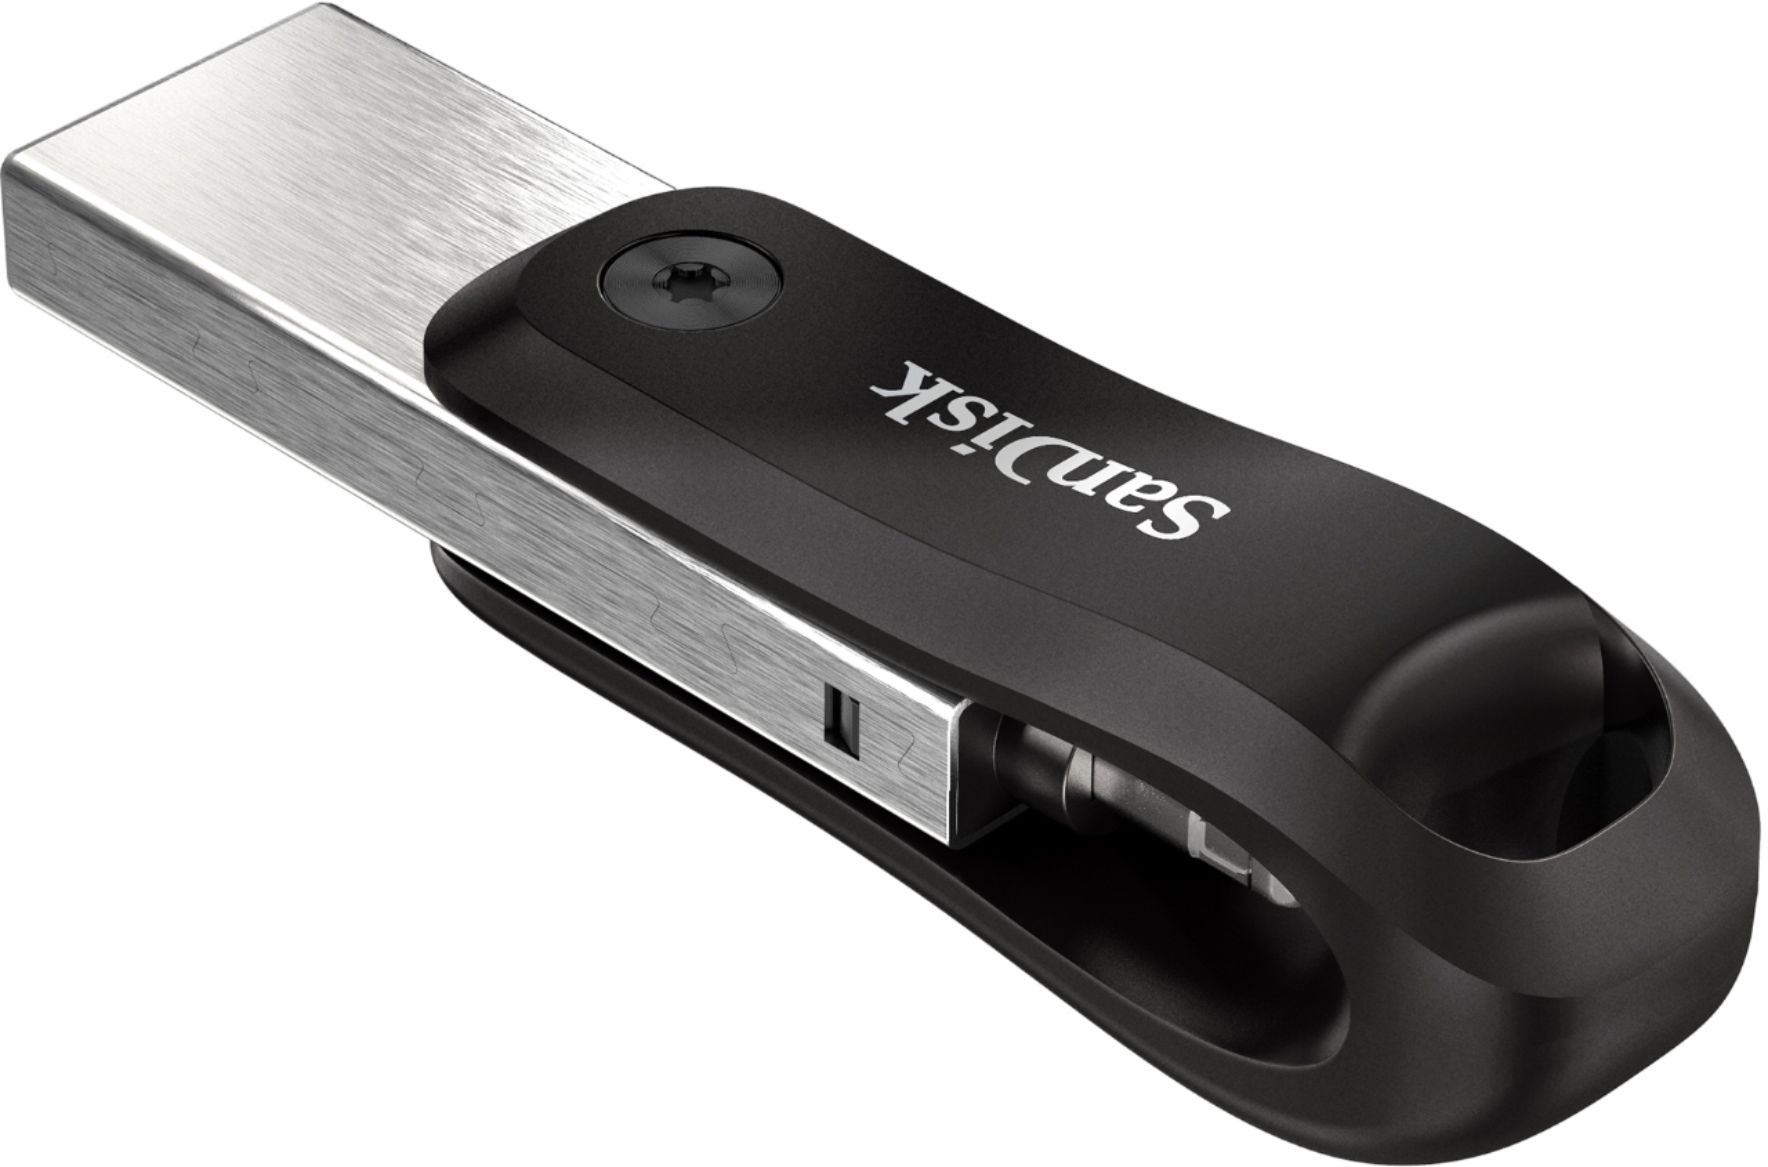 San Disk iXpand OTG USB 3.0 Flash Drive for iPhone ,iPad & Mac Book